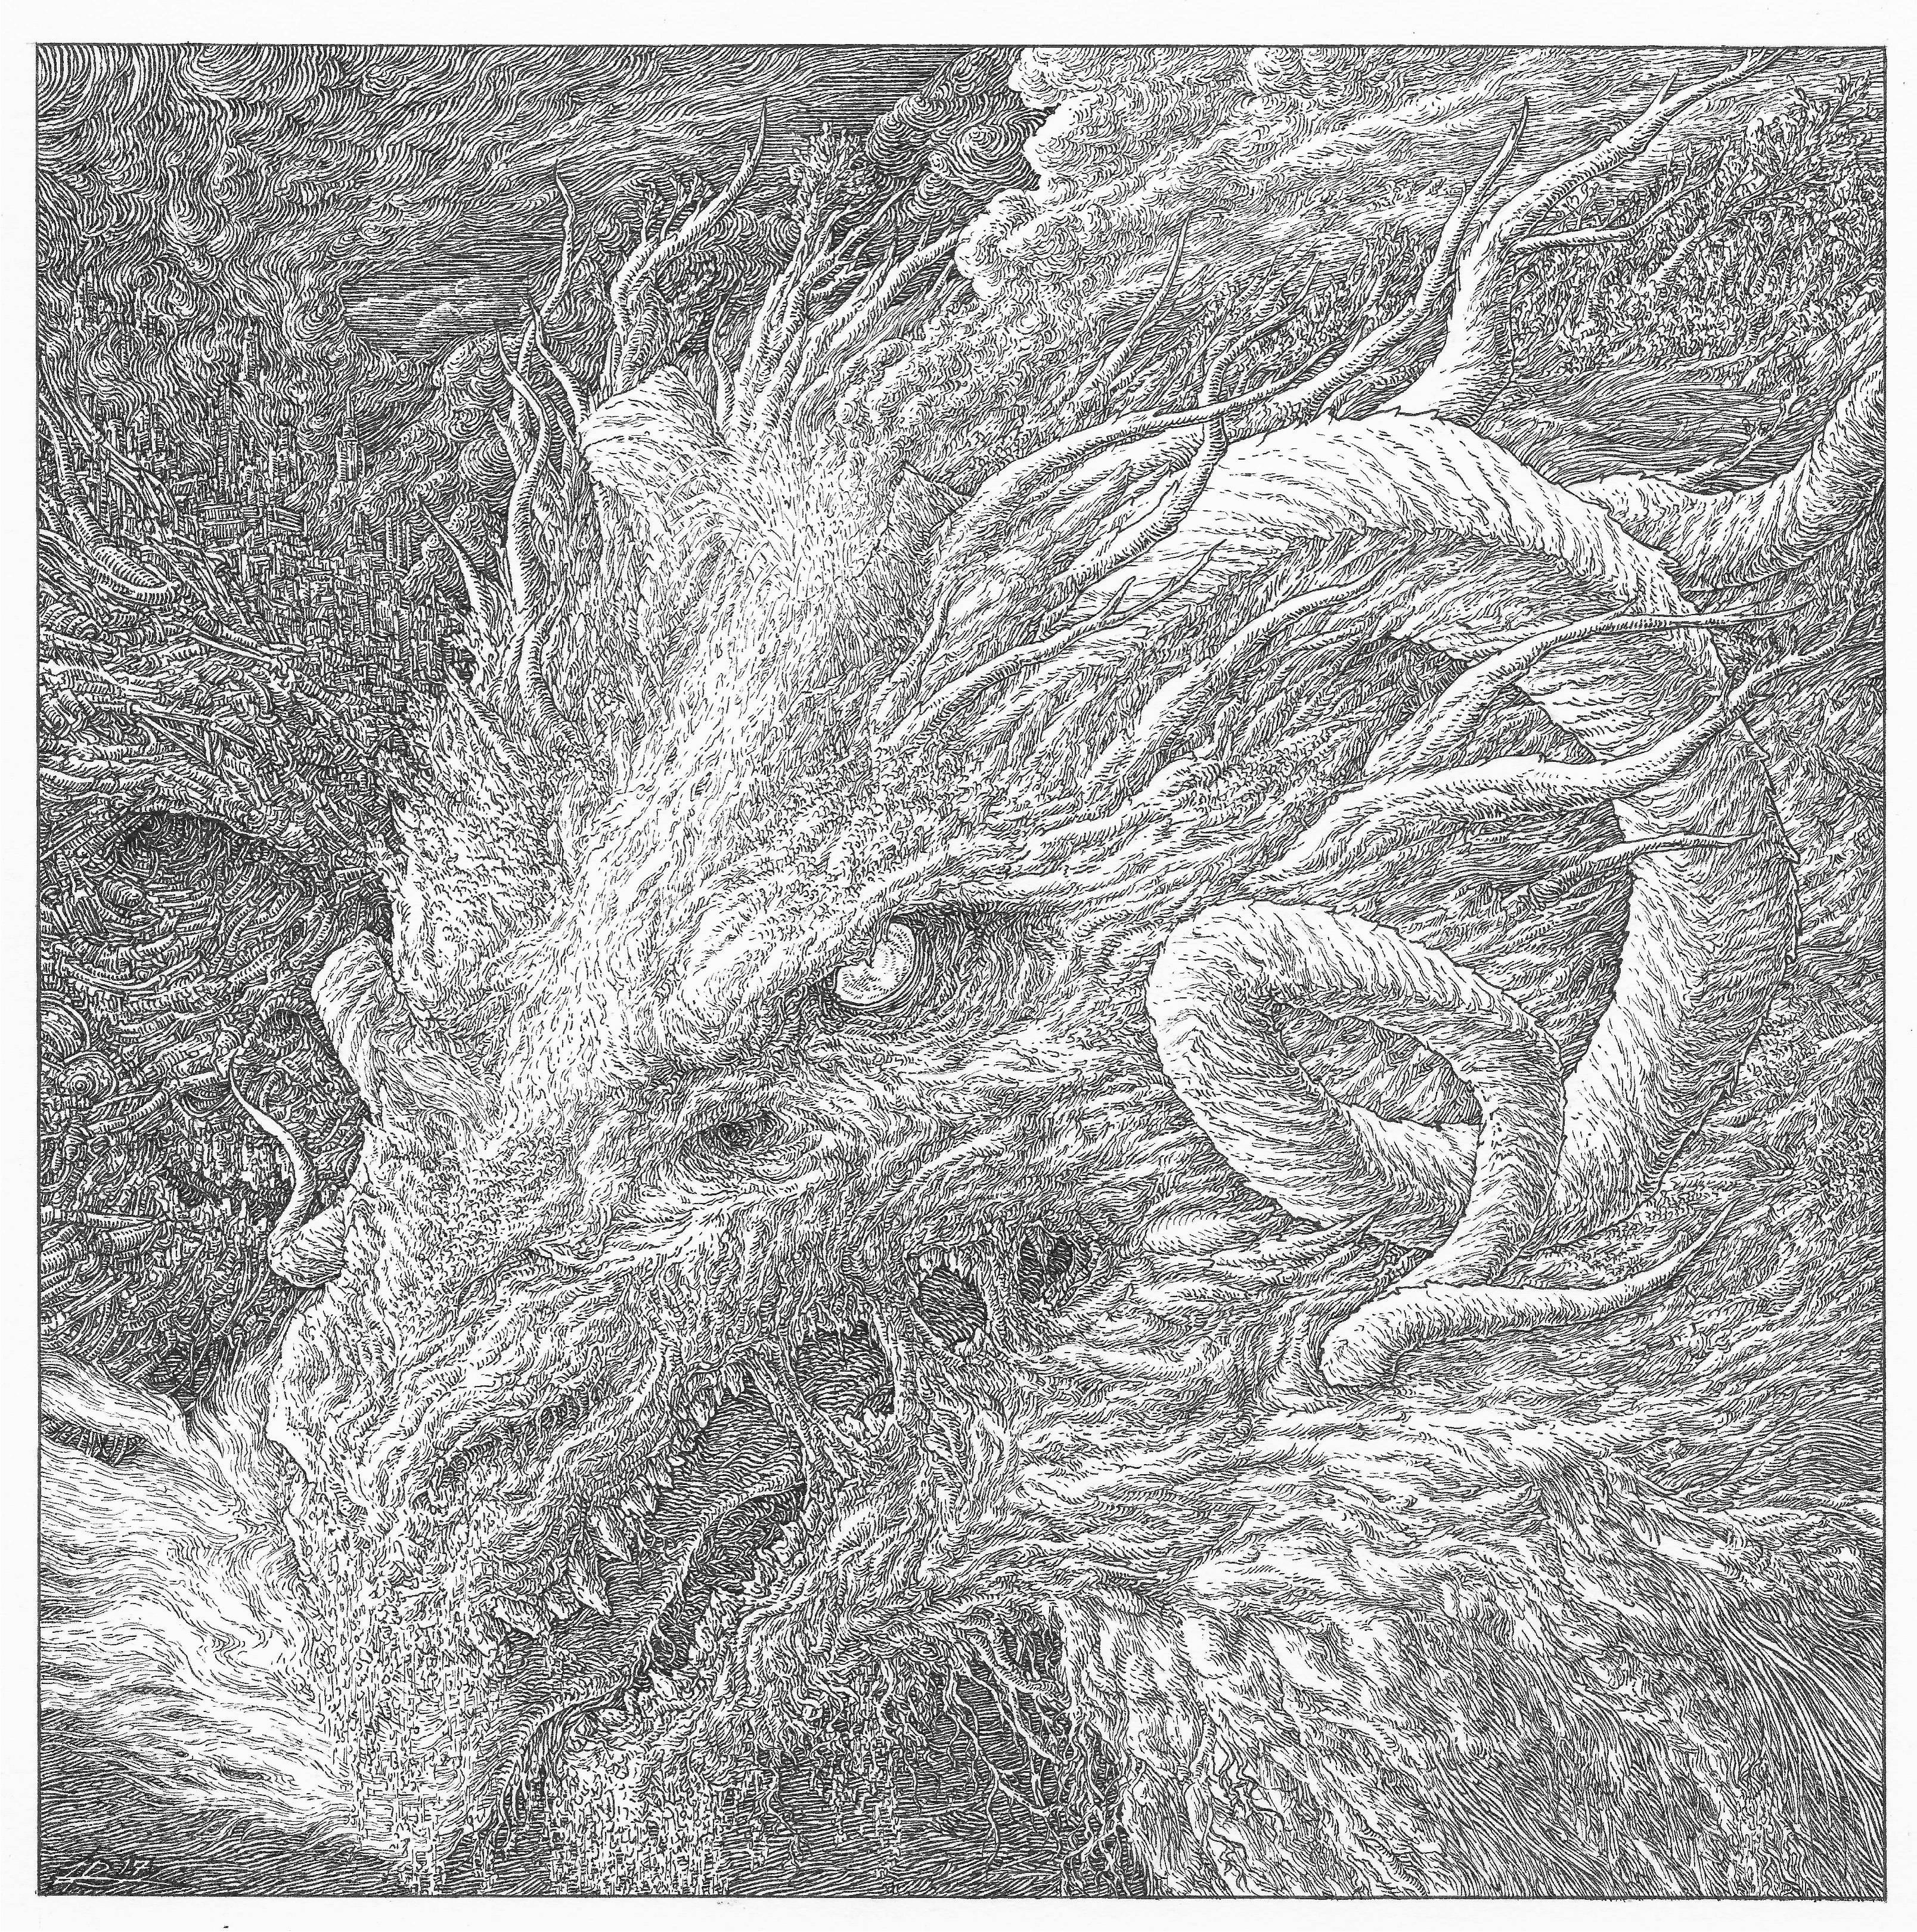 The Dragon - Art by Lucas Ruggieri